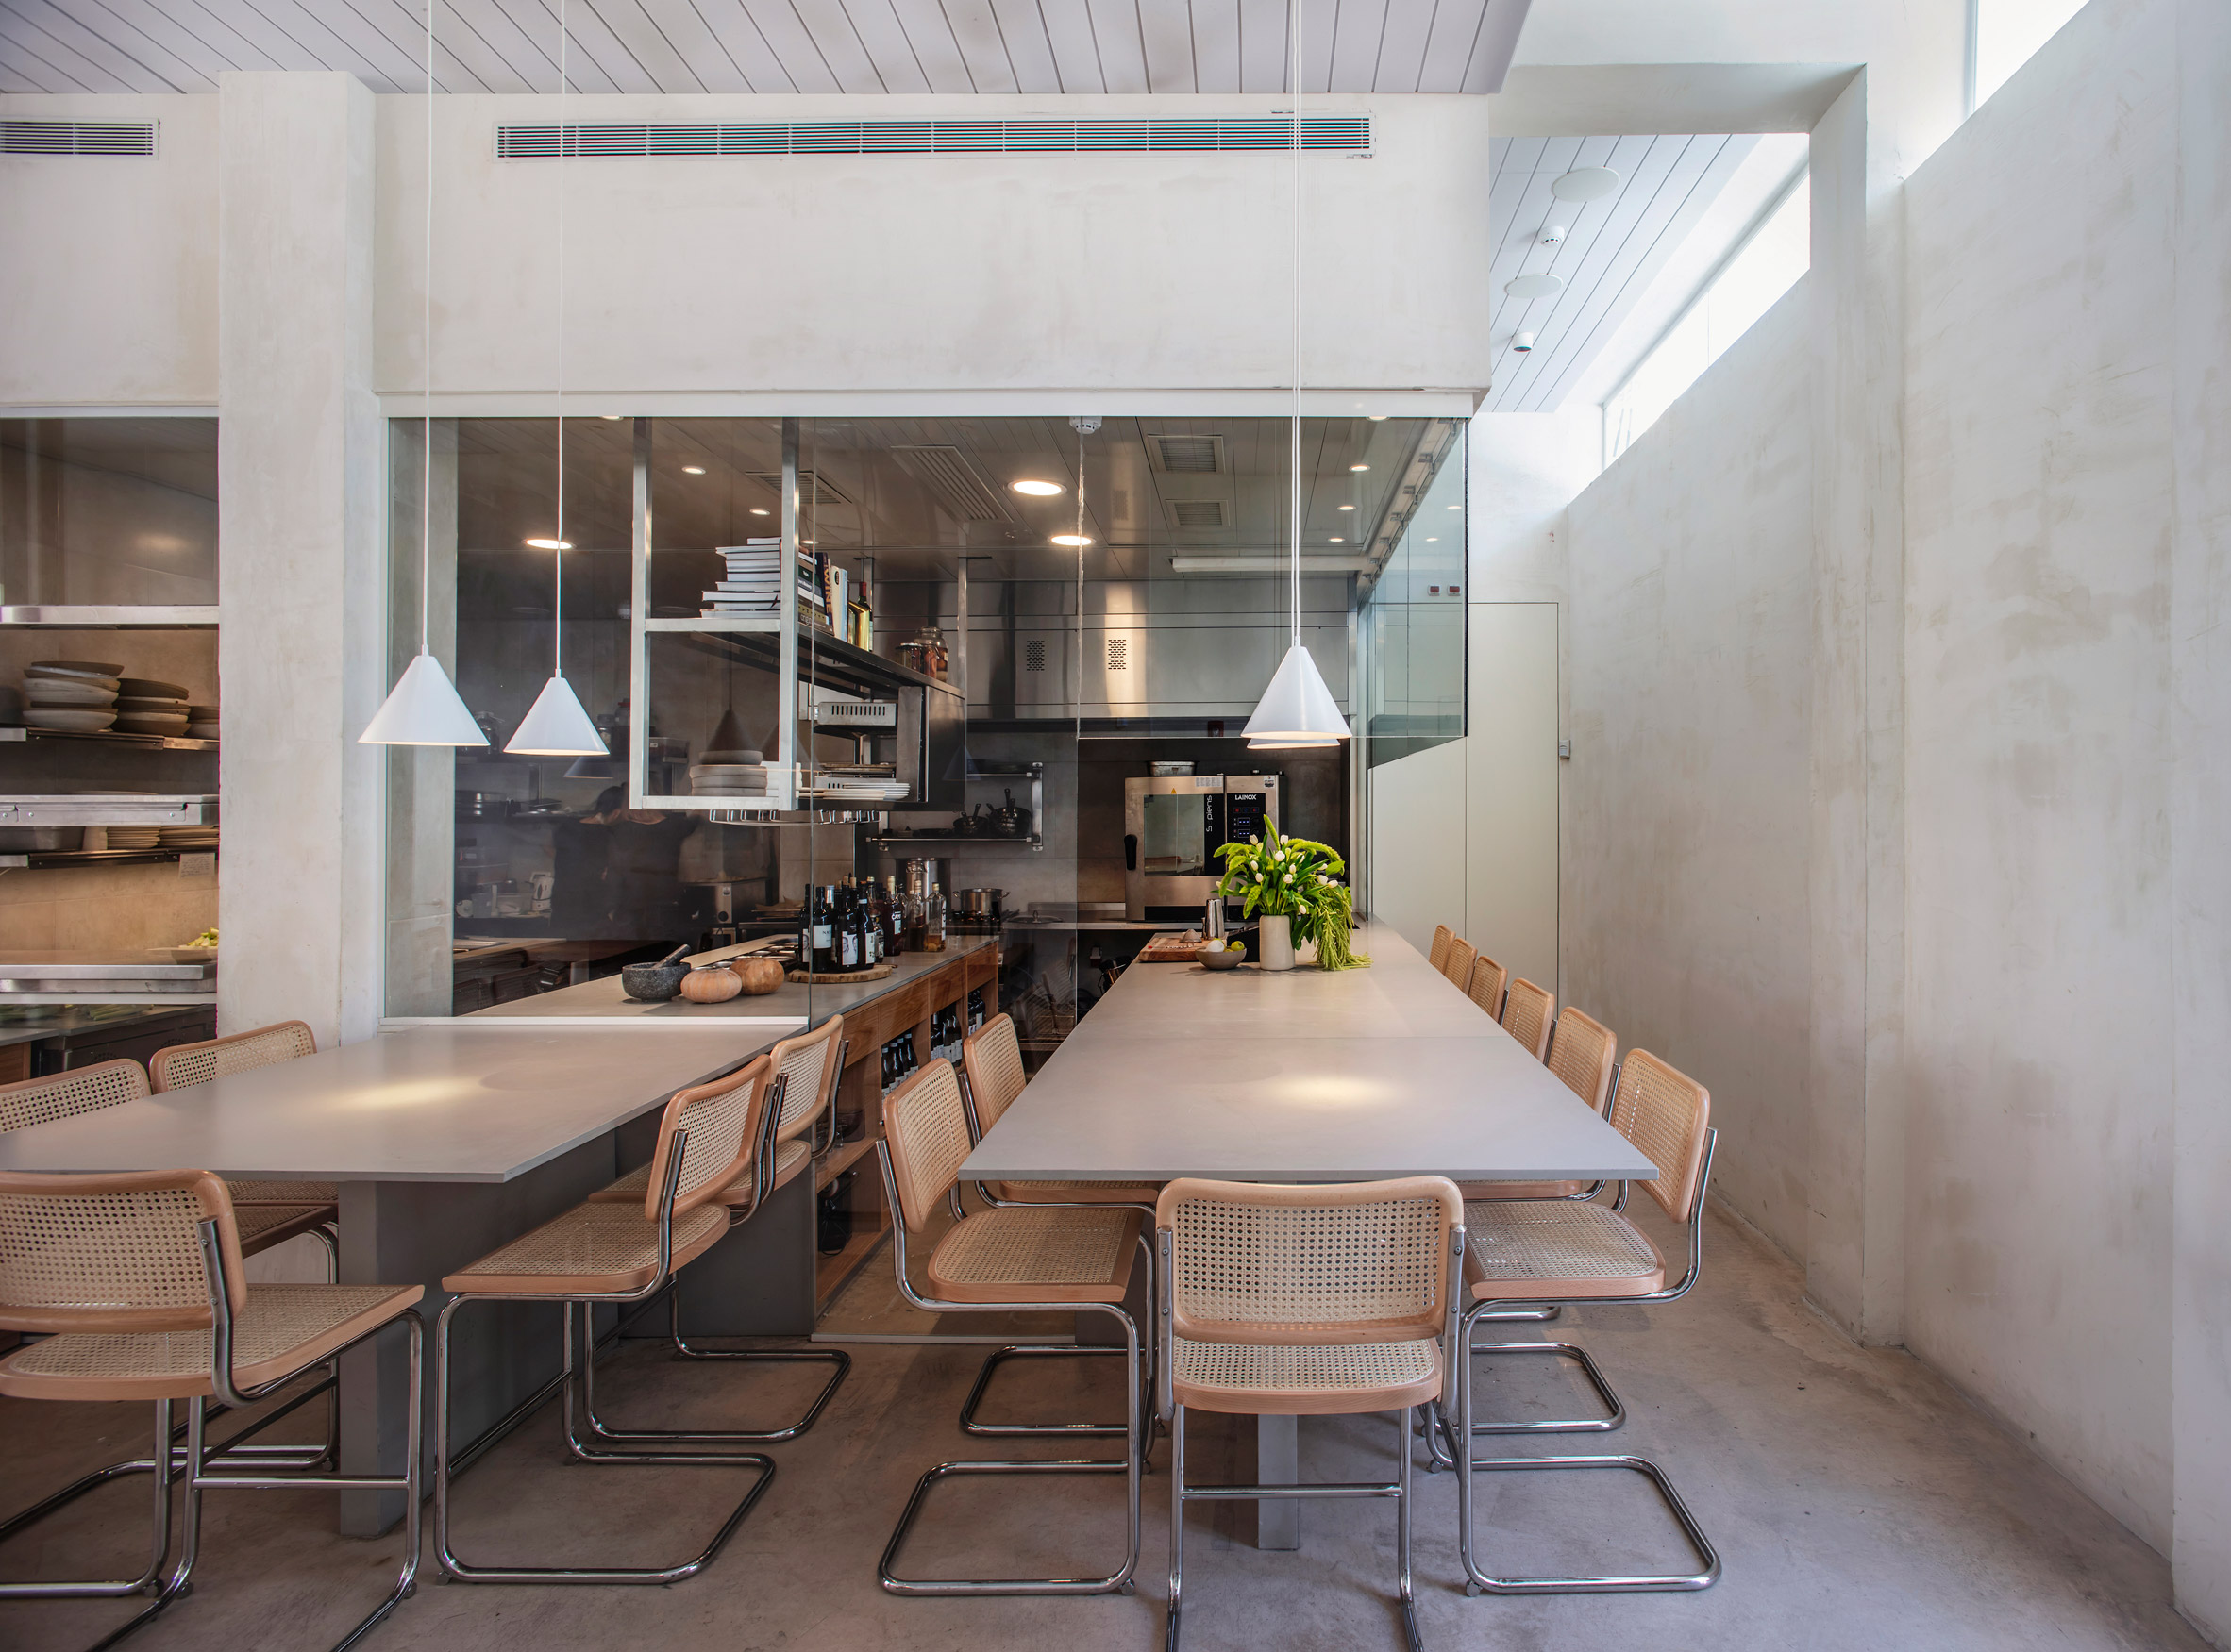 Interiors of Tel Aviv's Opa restaurant, designed by Craft & Bloom and Vered Kadouri